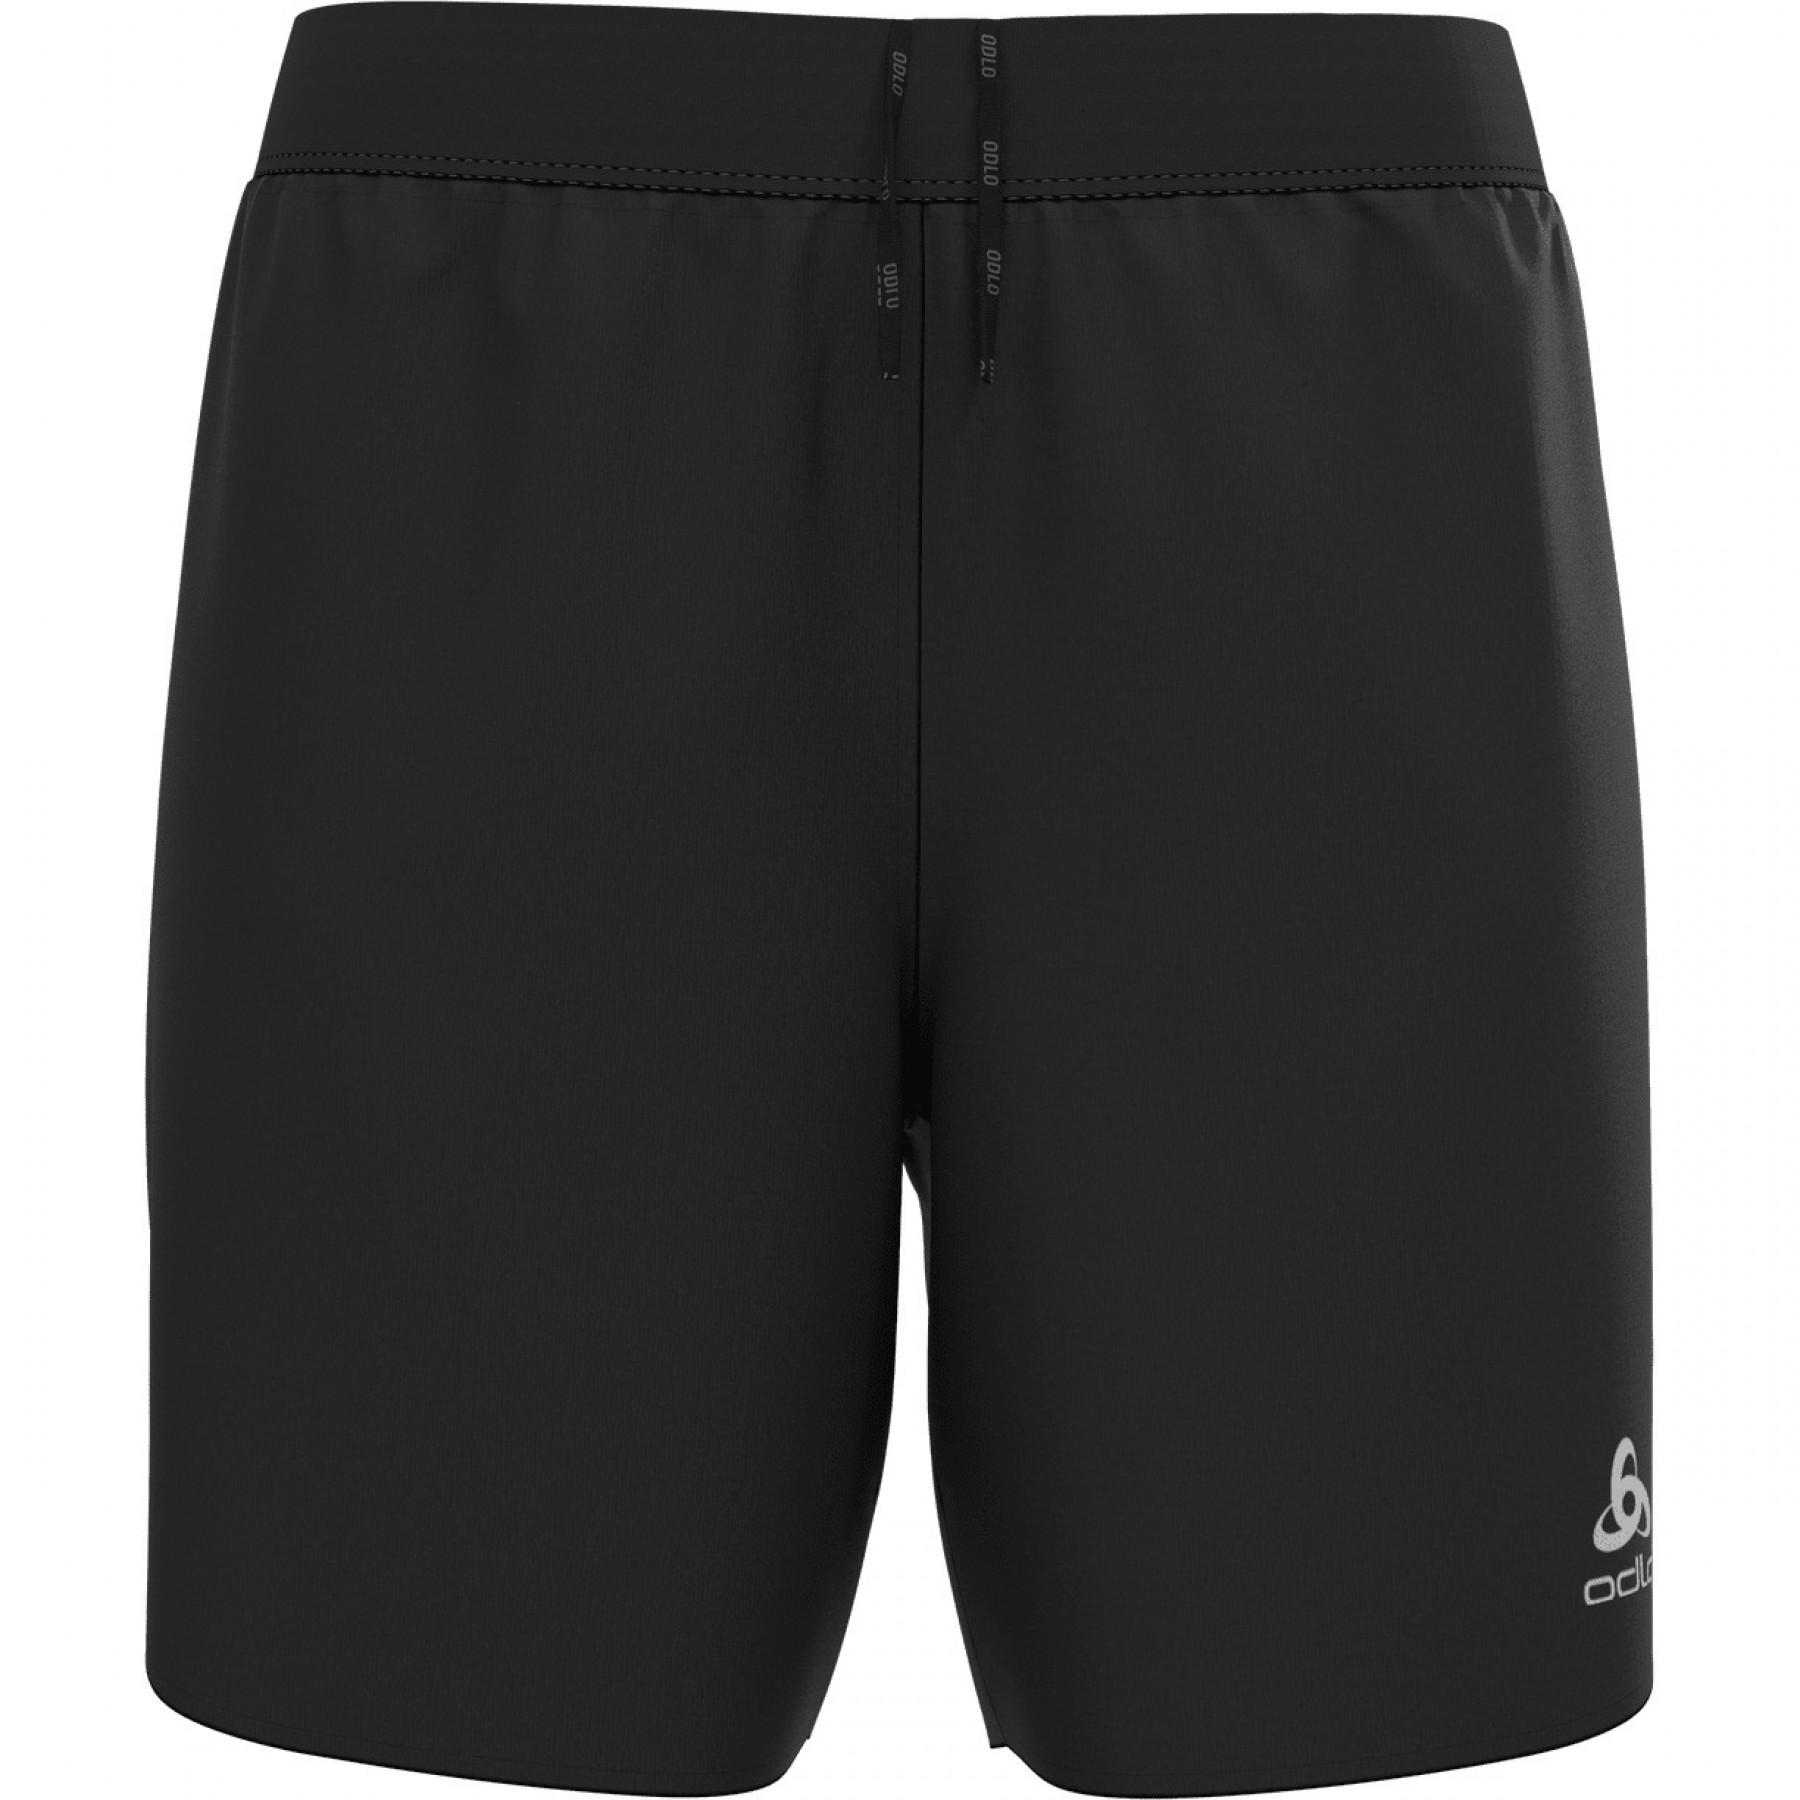 Women's shorts Odlo Zeroweight Wtaer Resistant